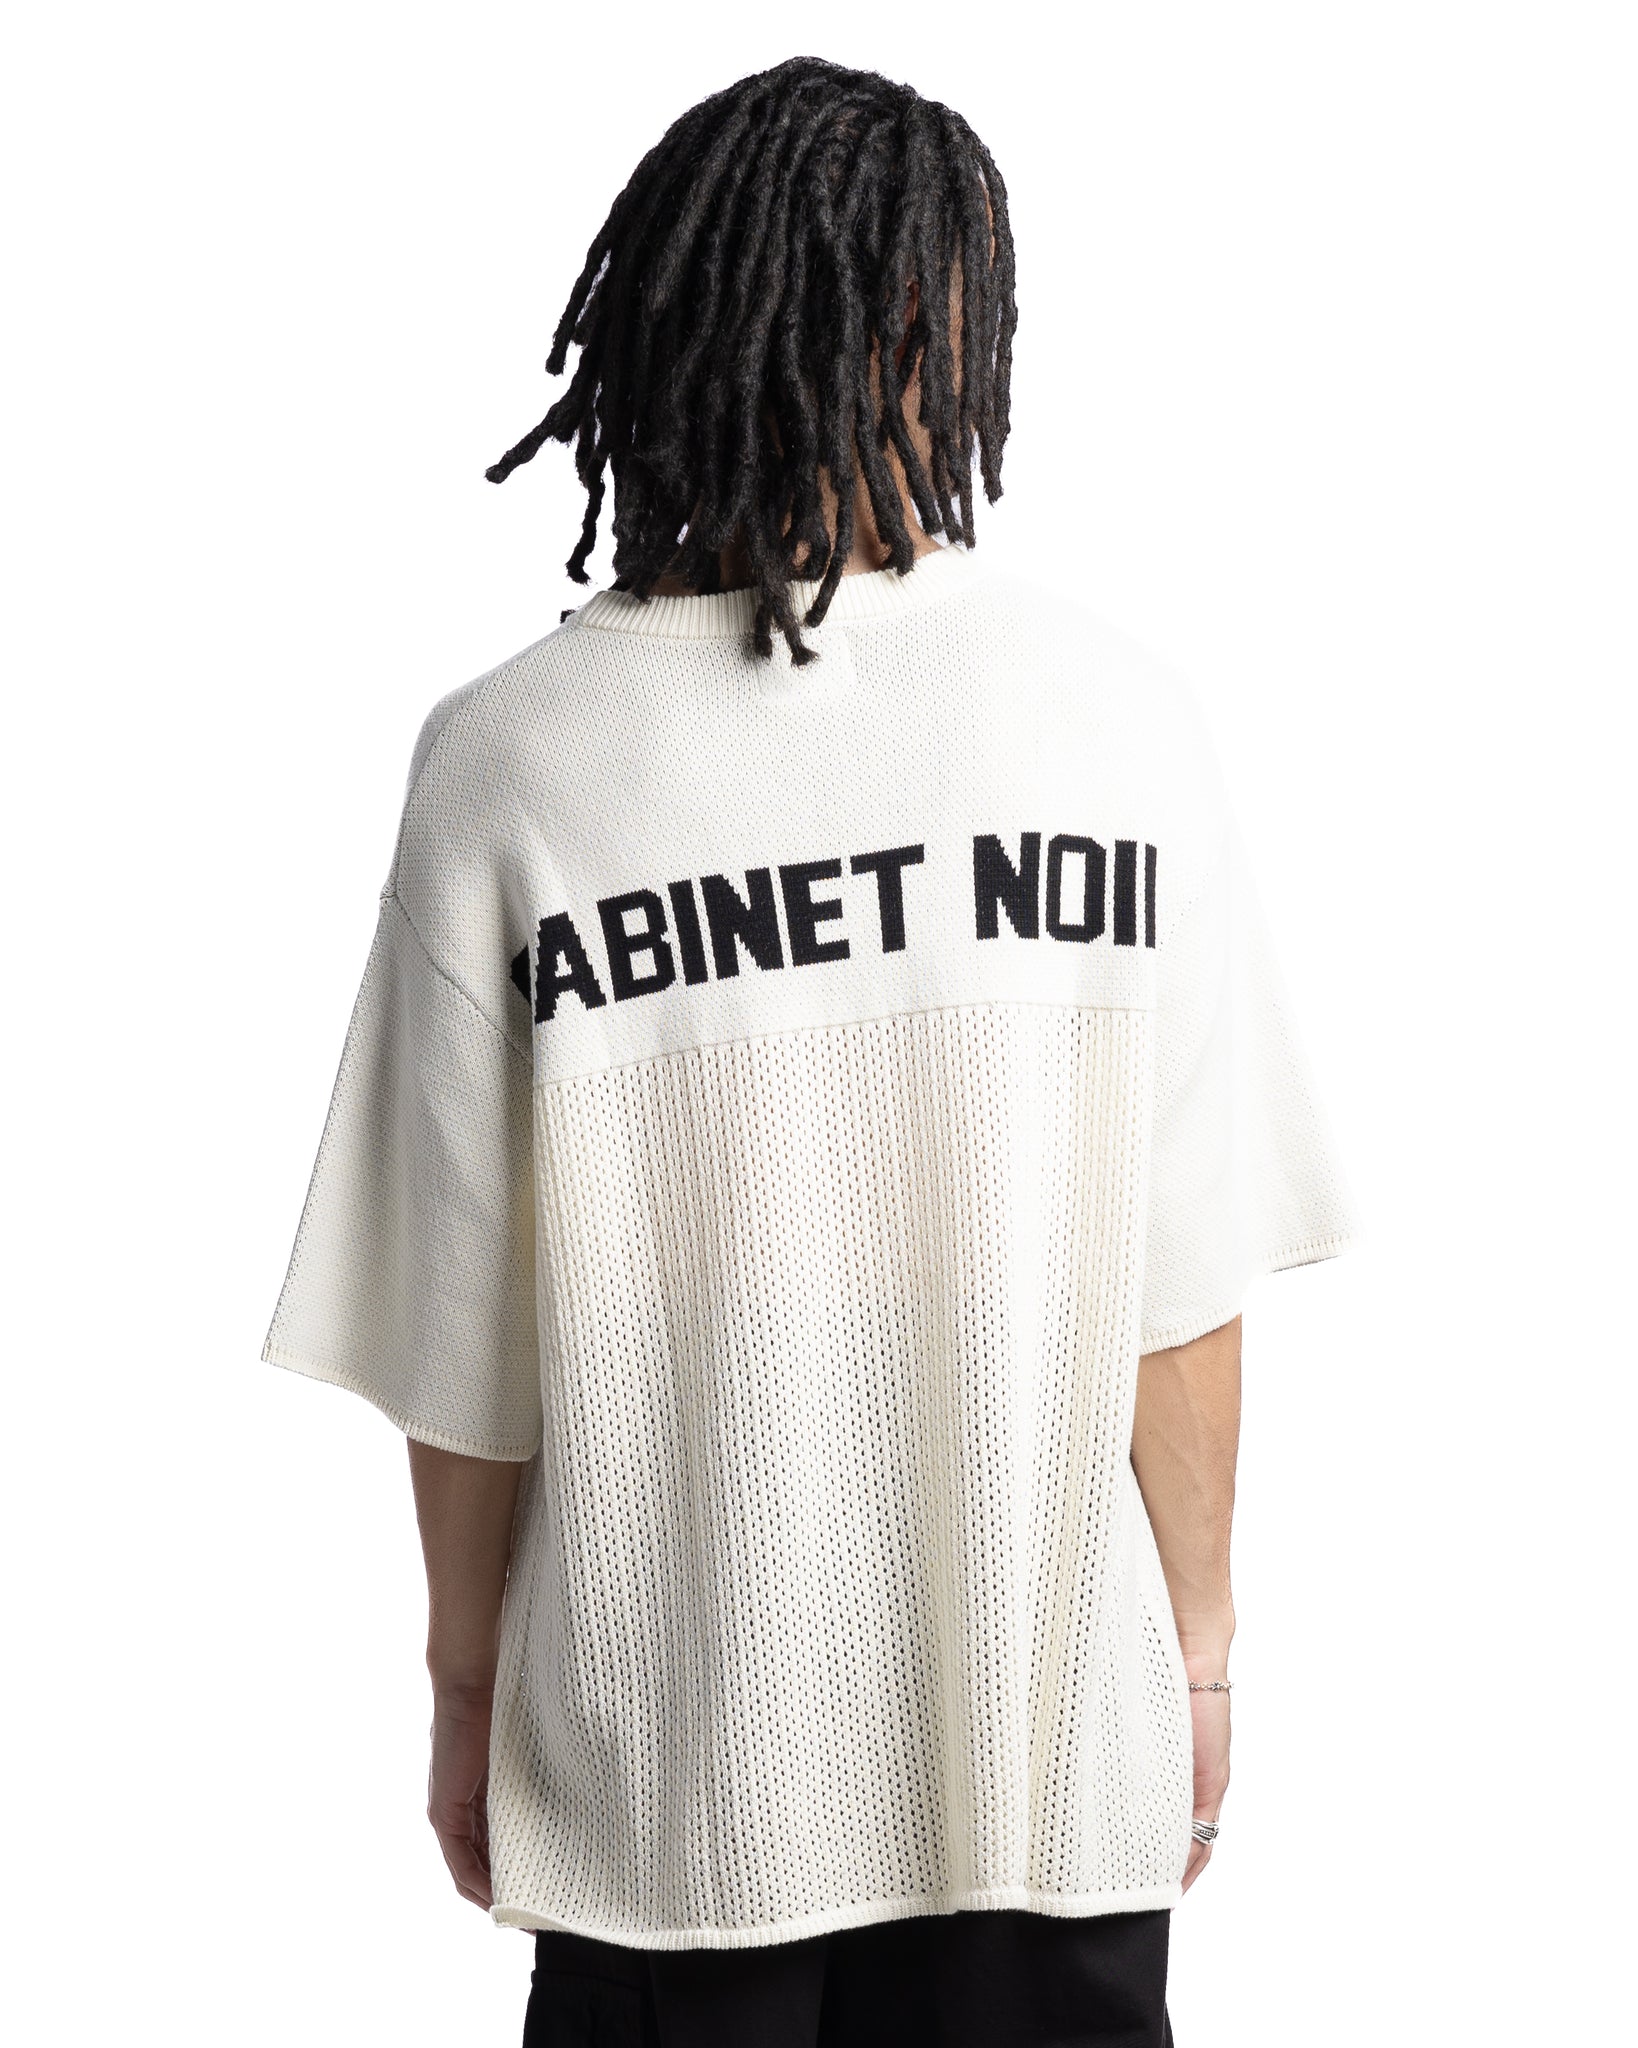 Cabinet Noir Jacquard Mesh Knit Tee Off White